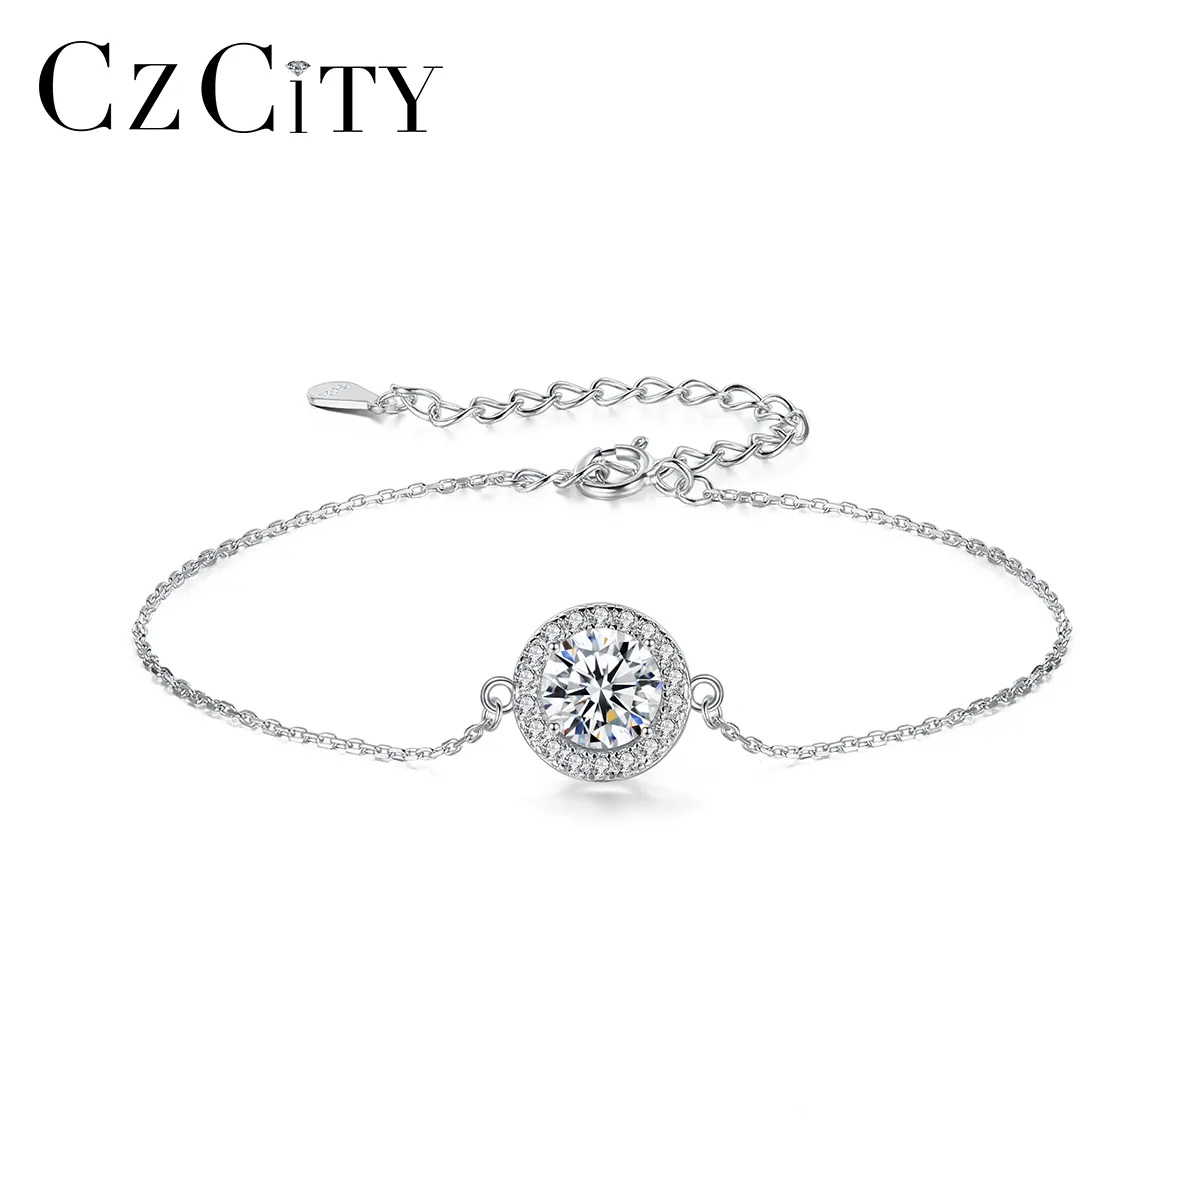 CZCITY Chain Fashion Designer Charm 925 Korean Sterling Silver Bangle Diamond Sliver Moissanite Bracelet